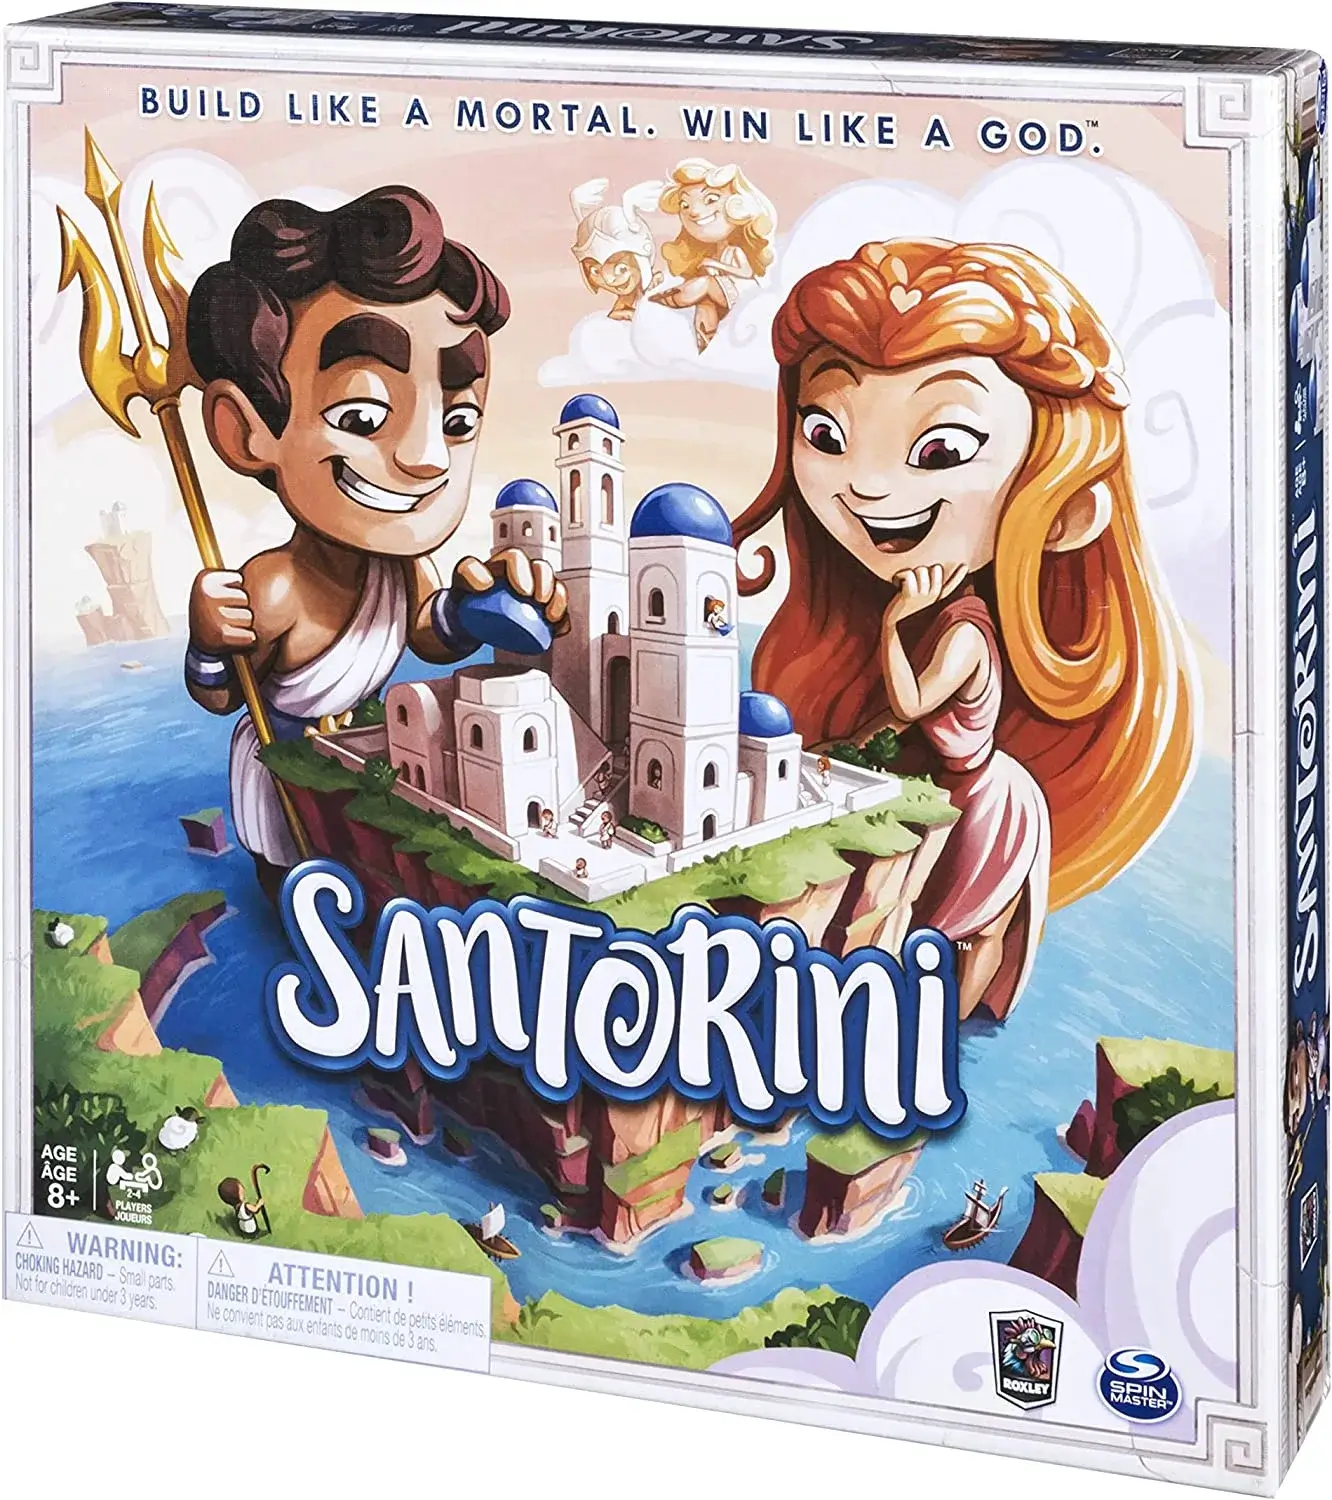 Santorini 2016 board game box